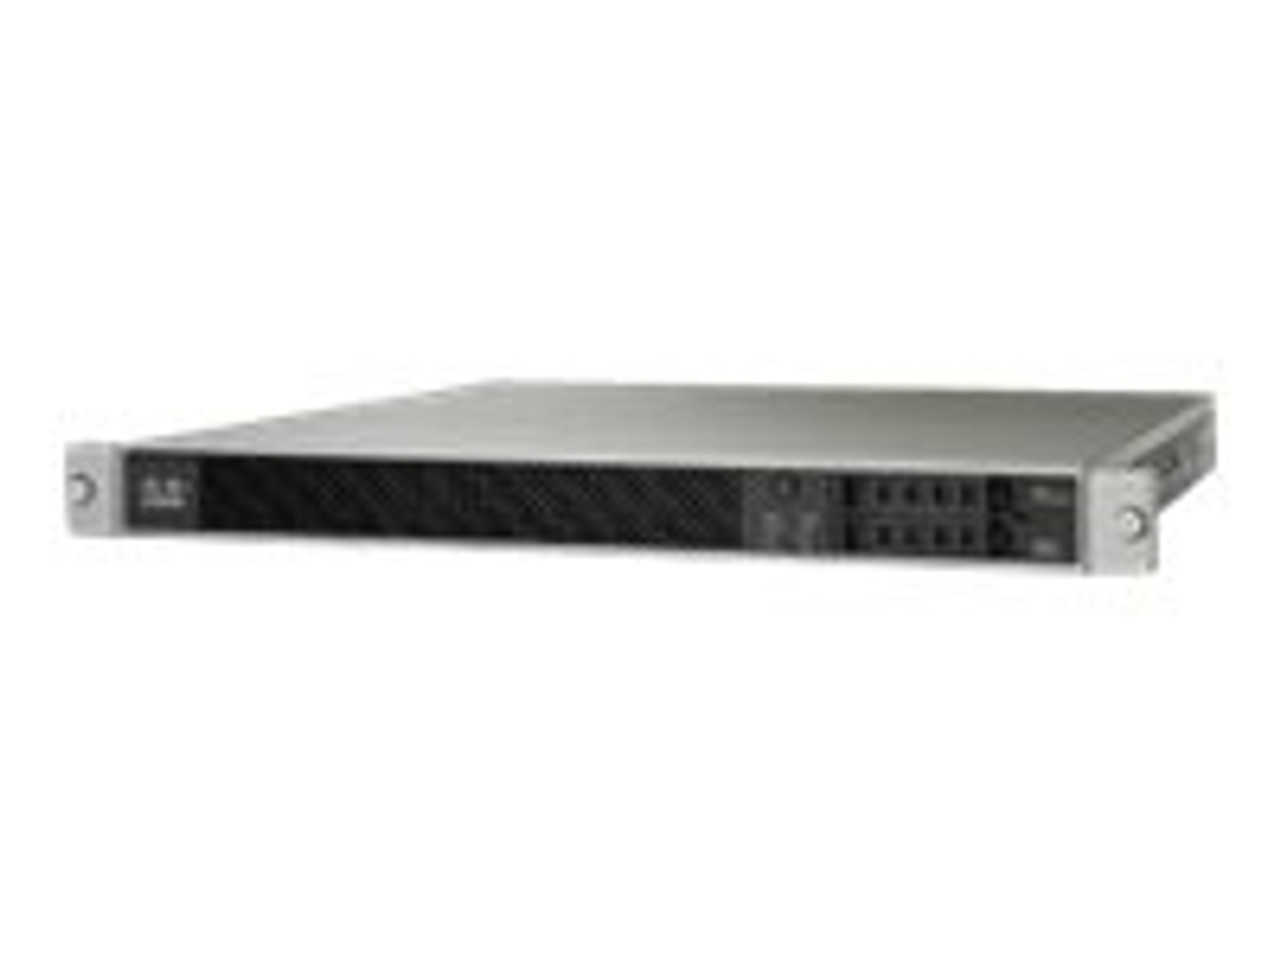 ASA5545-IPS-K8 Cisco ASA 5500 Series IPS Edition Bundles